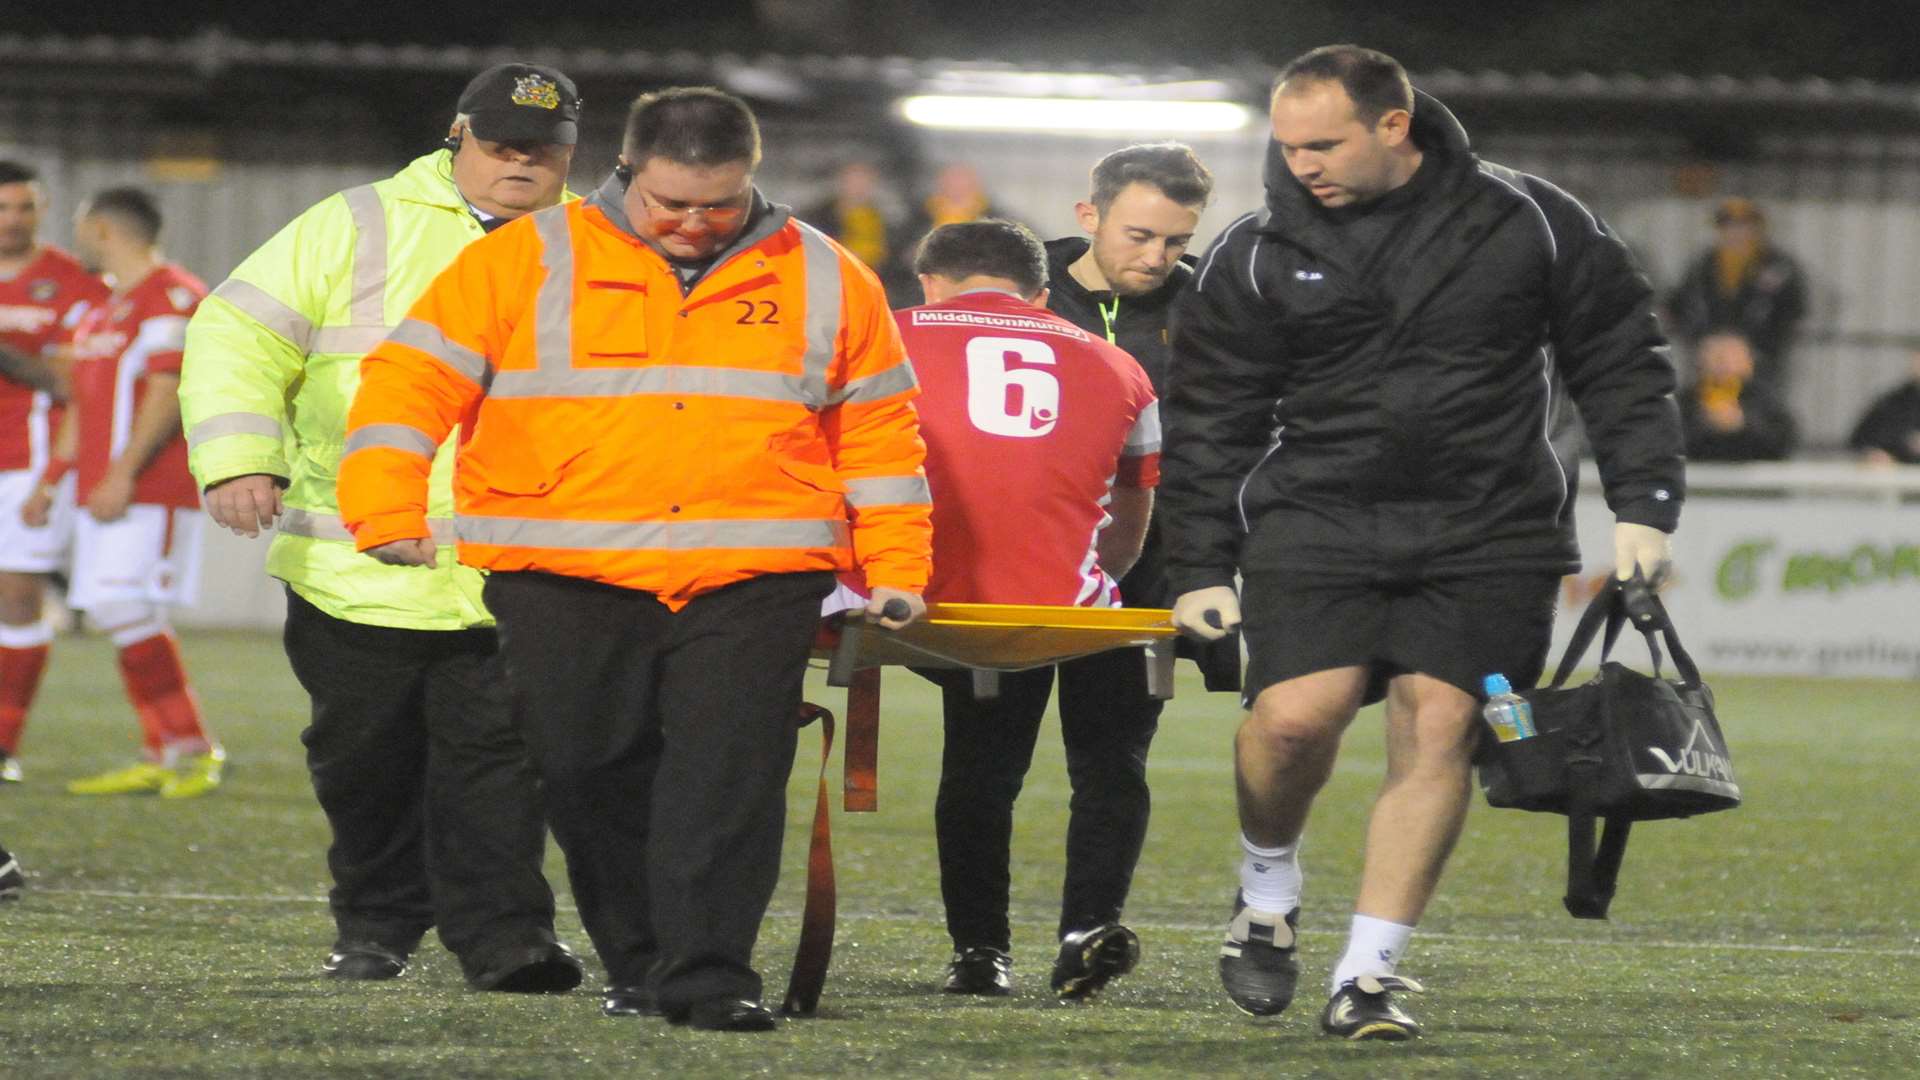 Lloyd Harrington leaves the pitch on a stretcher Picture: Steve Crispe